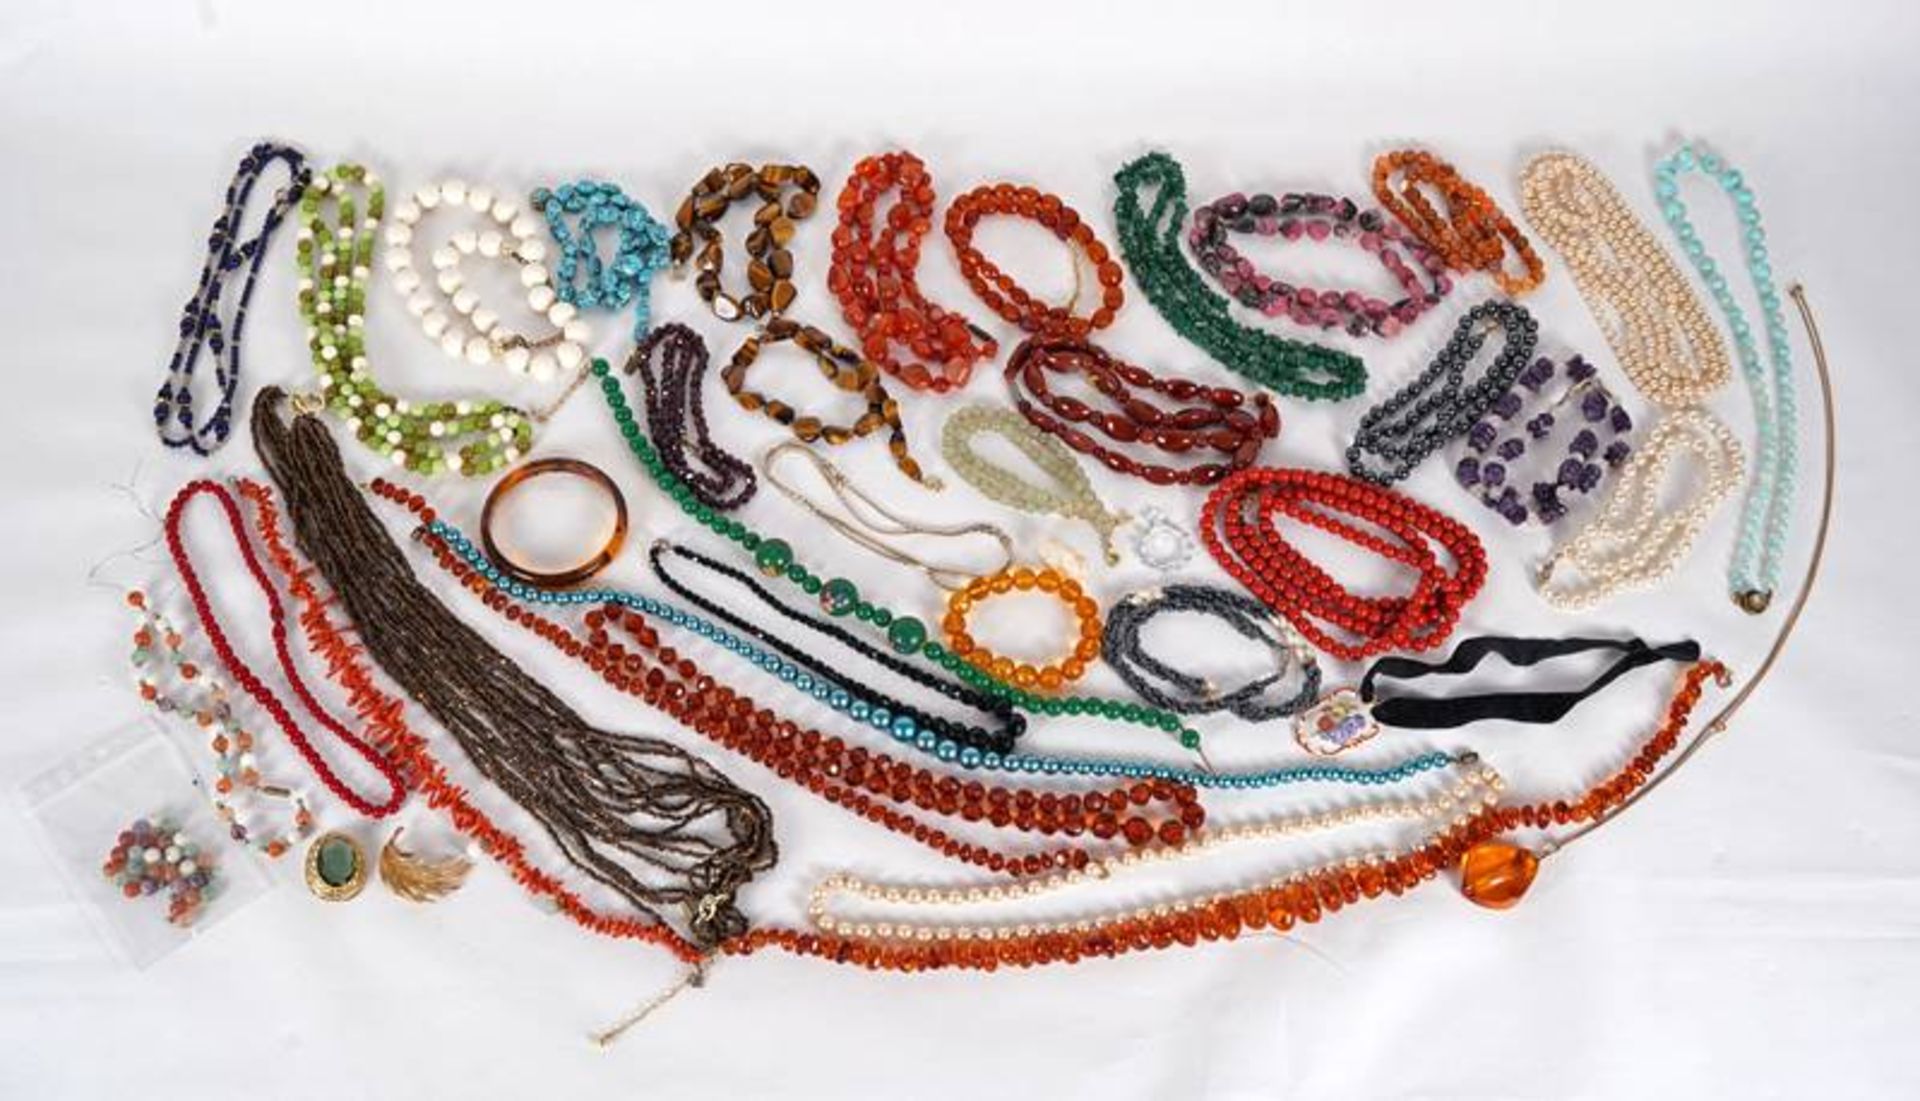 Large assortment of costume jewellery